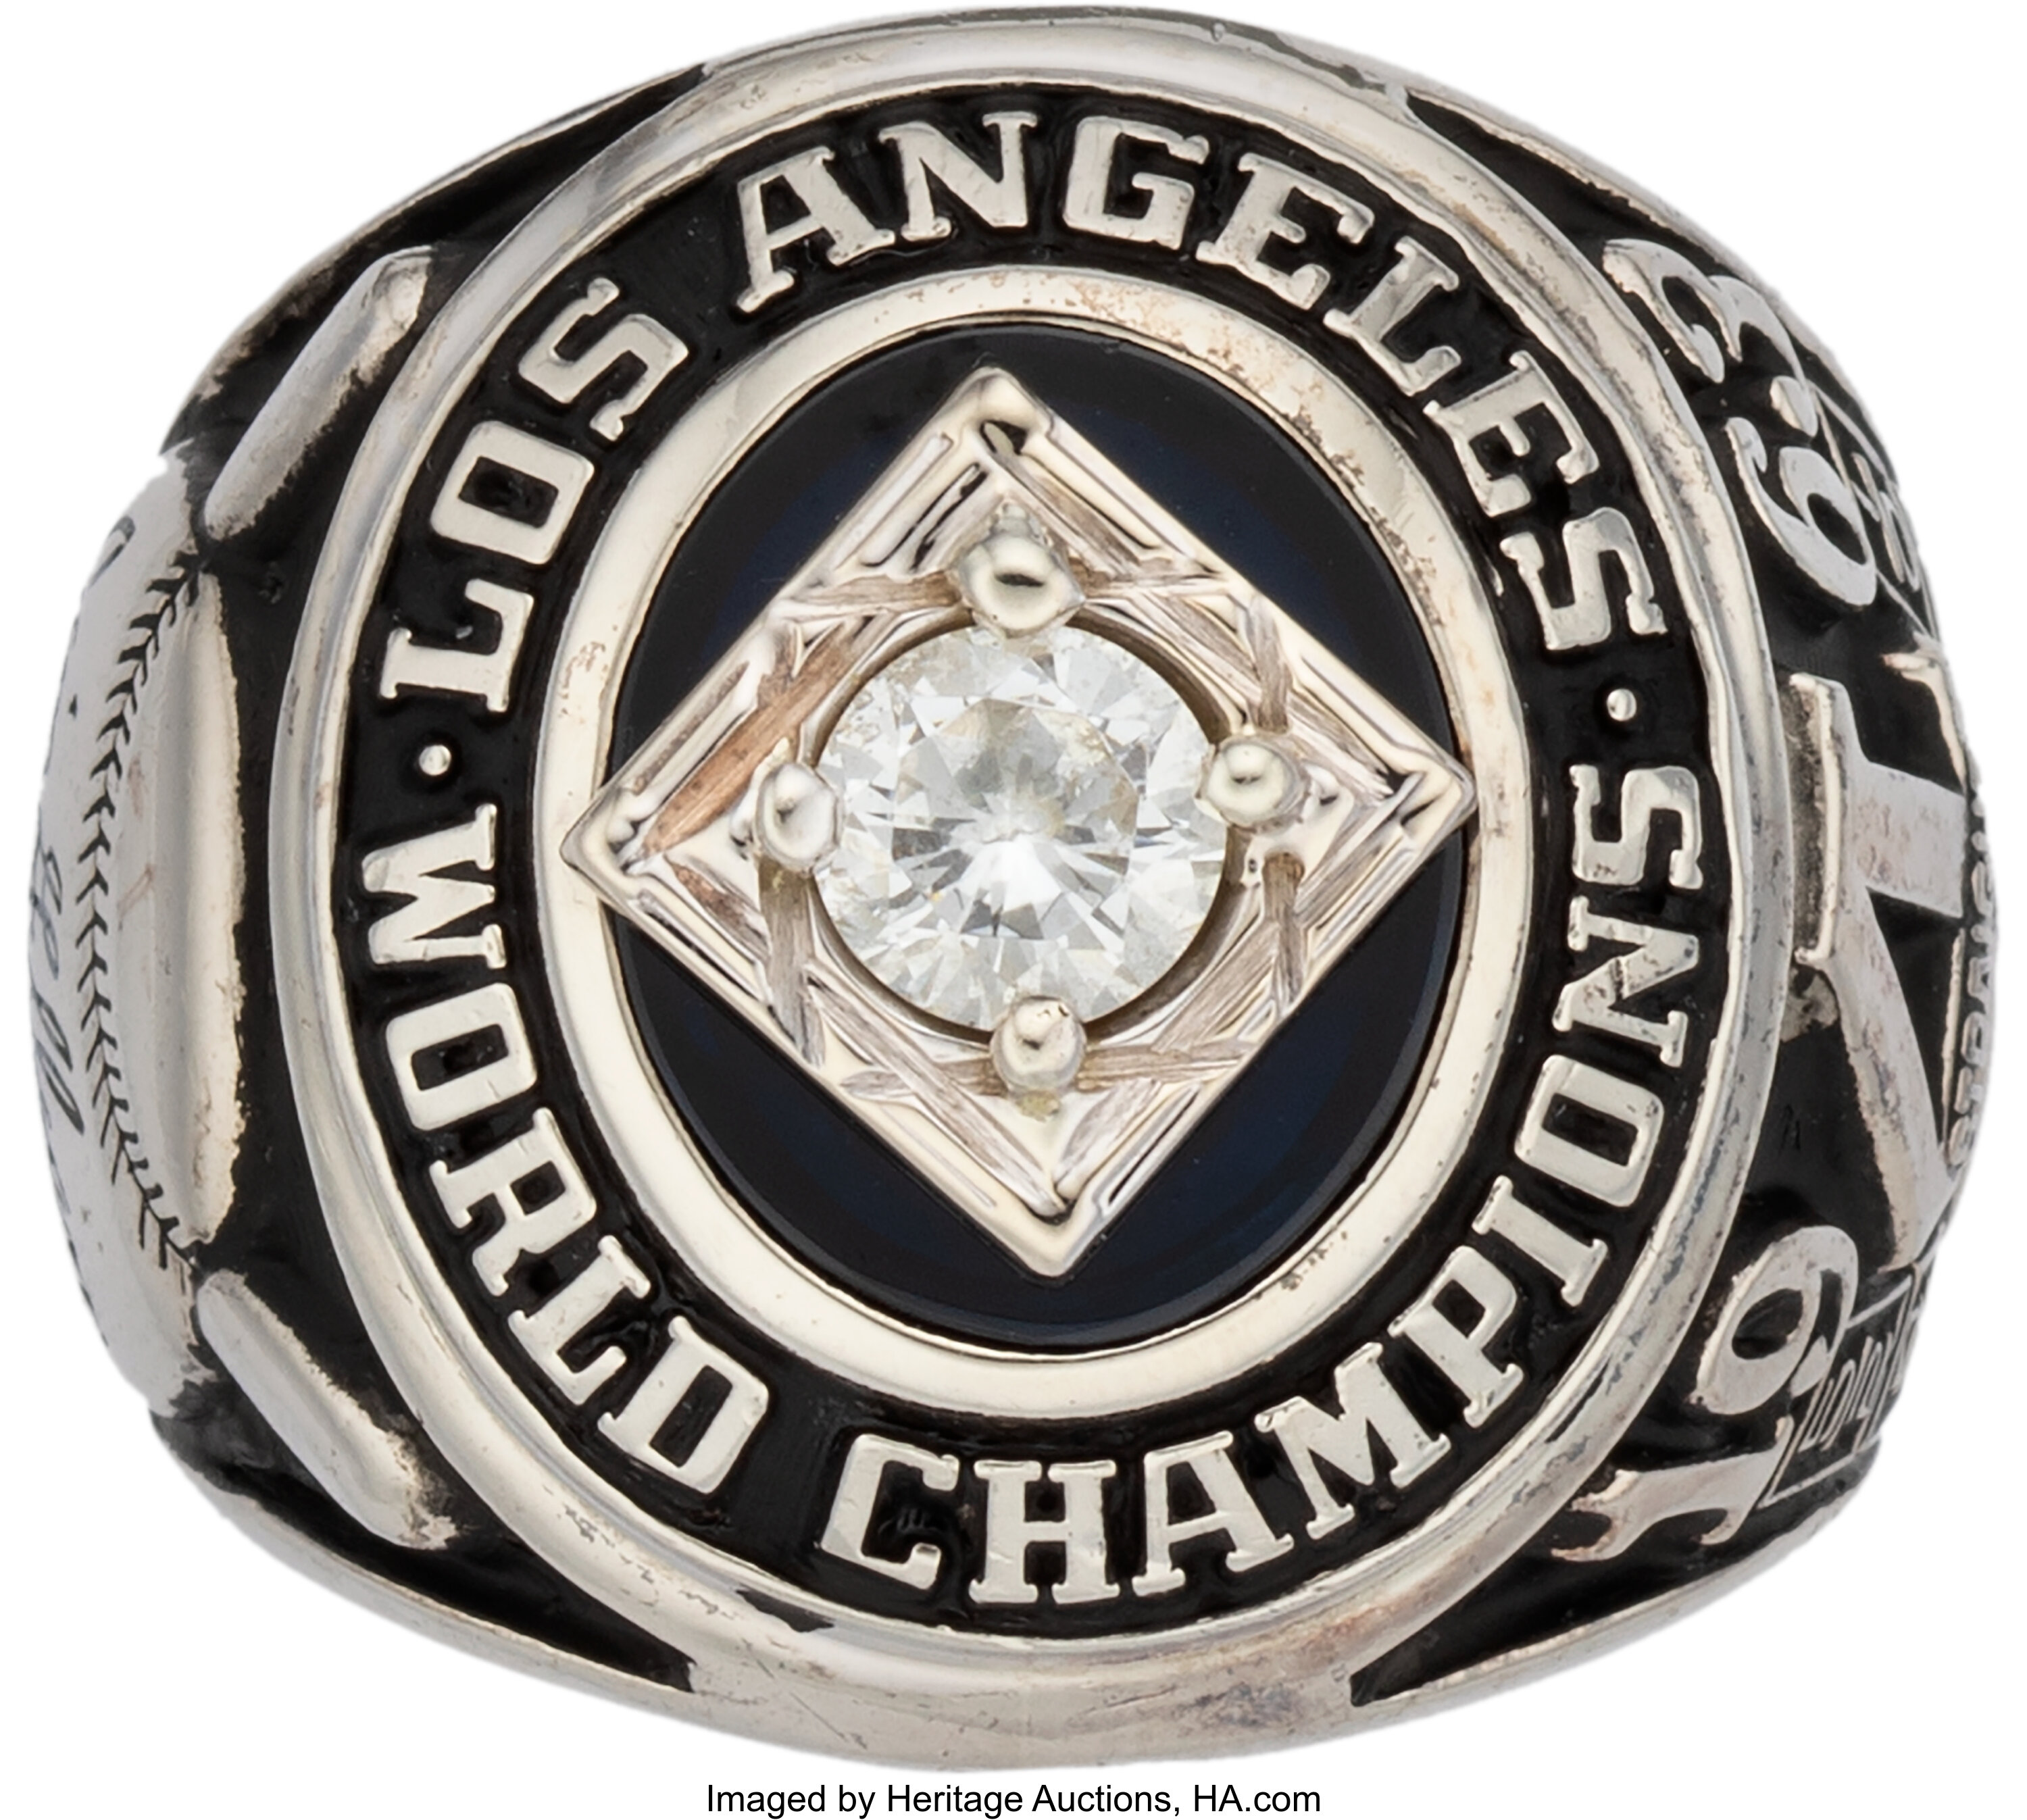 Los Angeles Dodgers 60th Anniversary 1963-2023 World Series Champions World  Series 1963 Signatures shirt